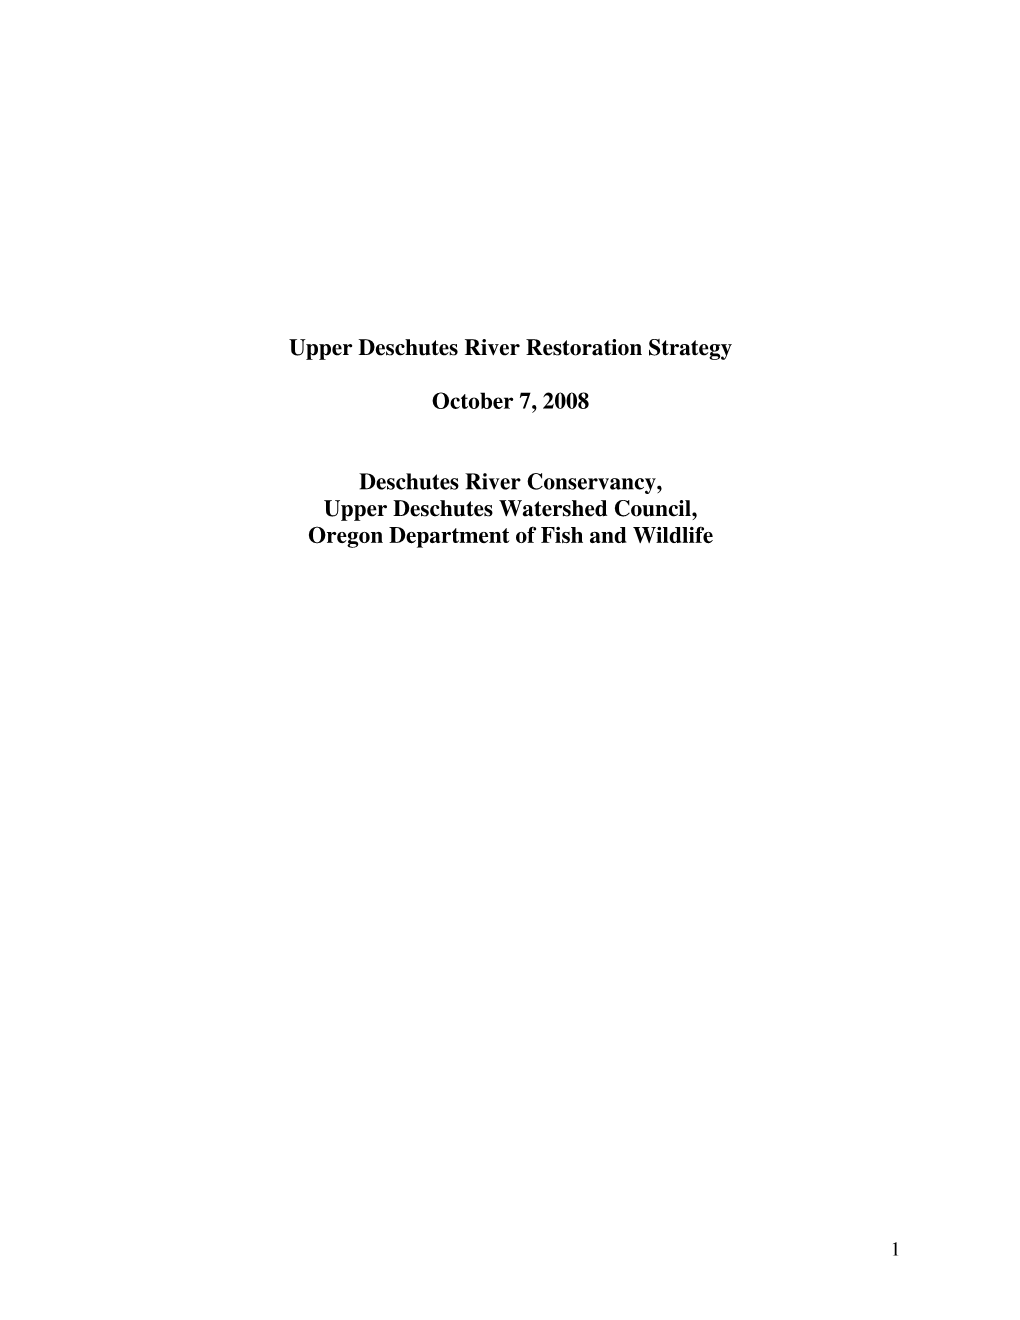 Upper Deschutes River Restoration Strategy October 7, 2008